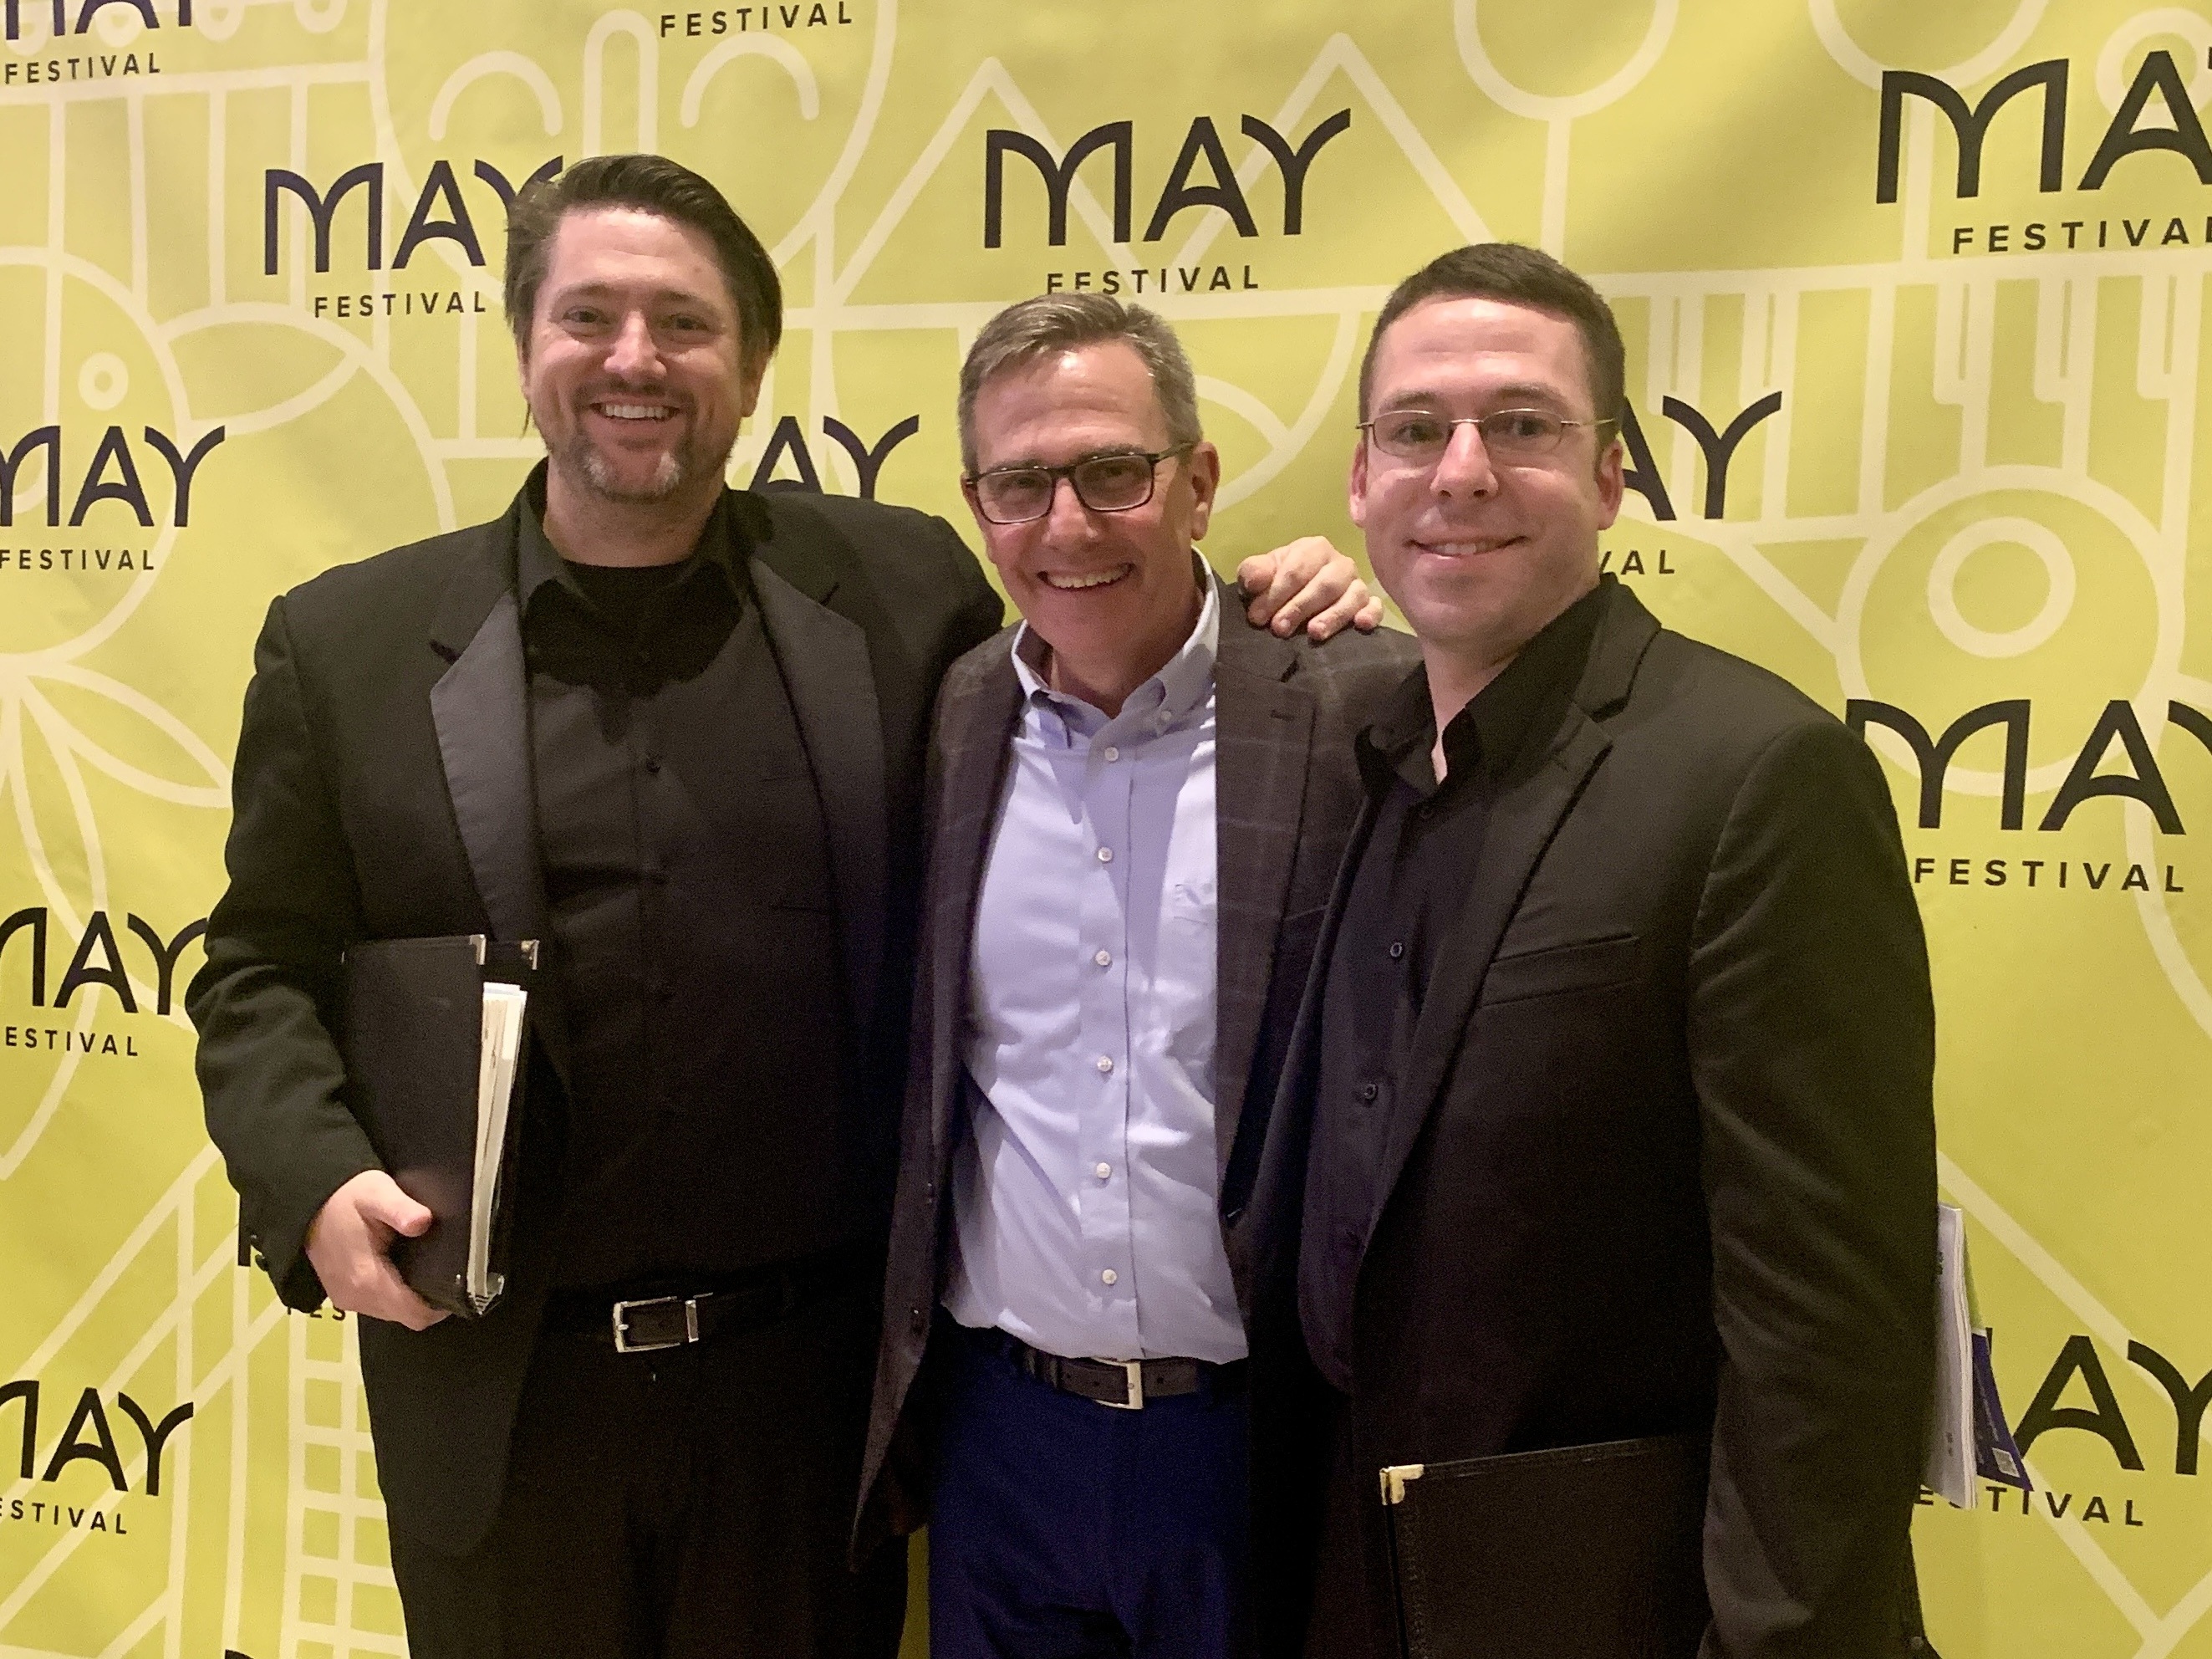 Two BGSU alumni pose with their former trombone professor at the Cincinnati May Festival.